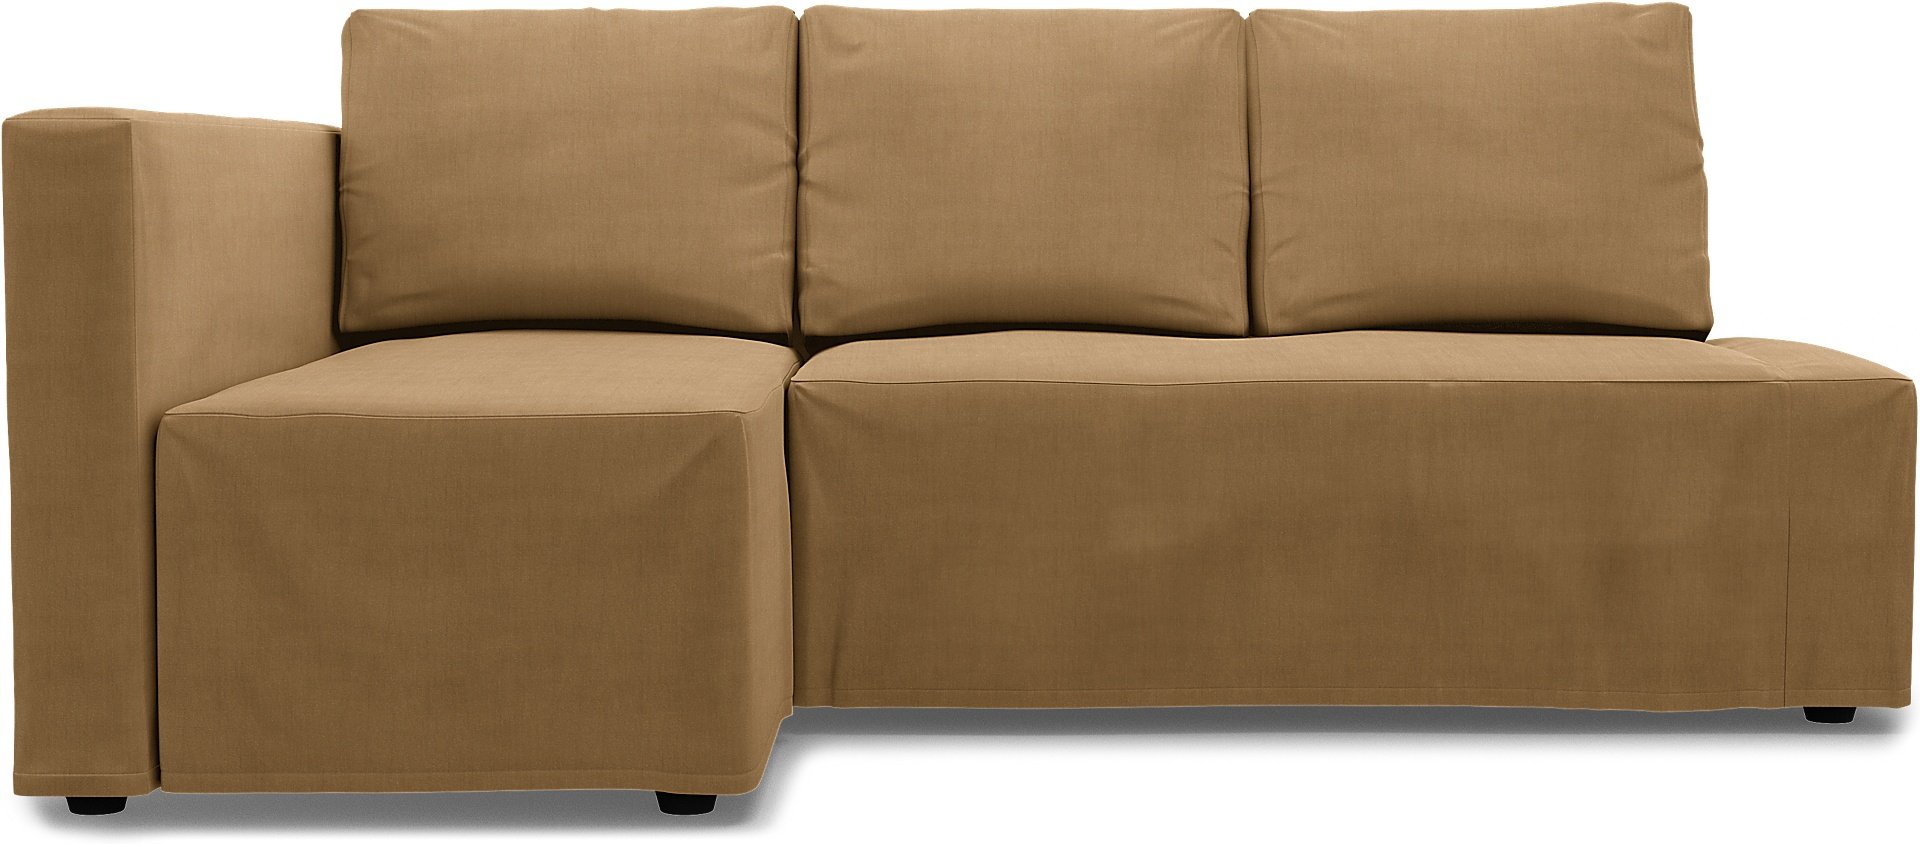 IKEA - Friheten Sofa Bed with Left Chaise Cover, Hemp, Linen - Bemz